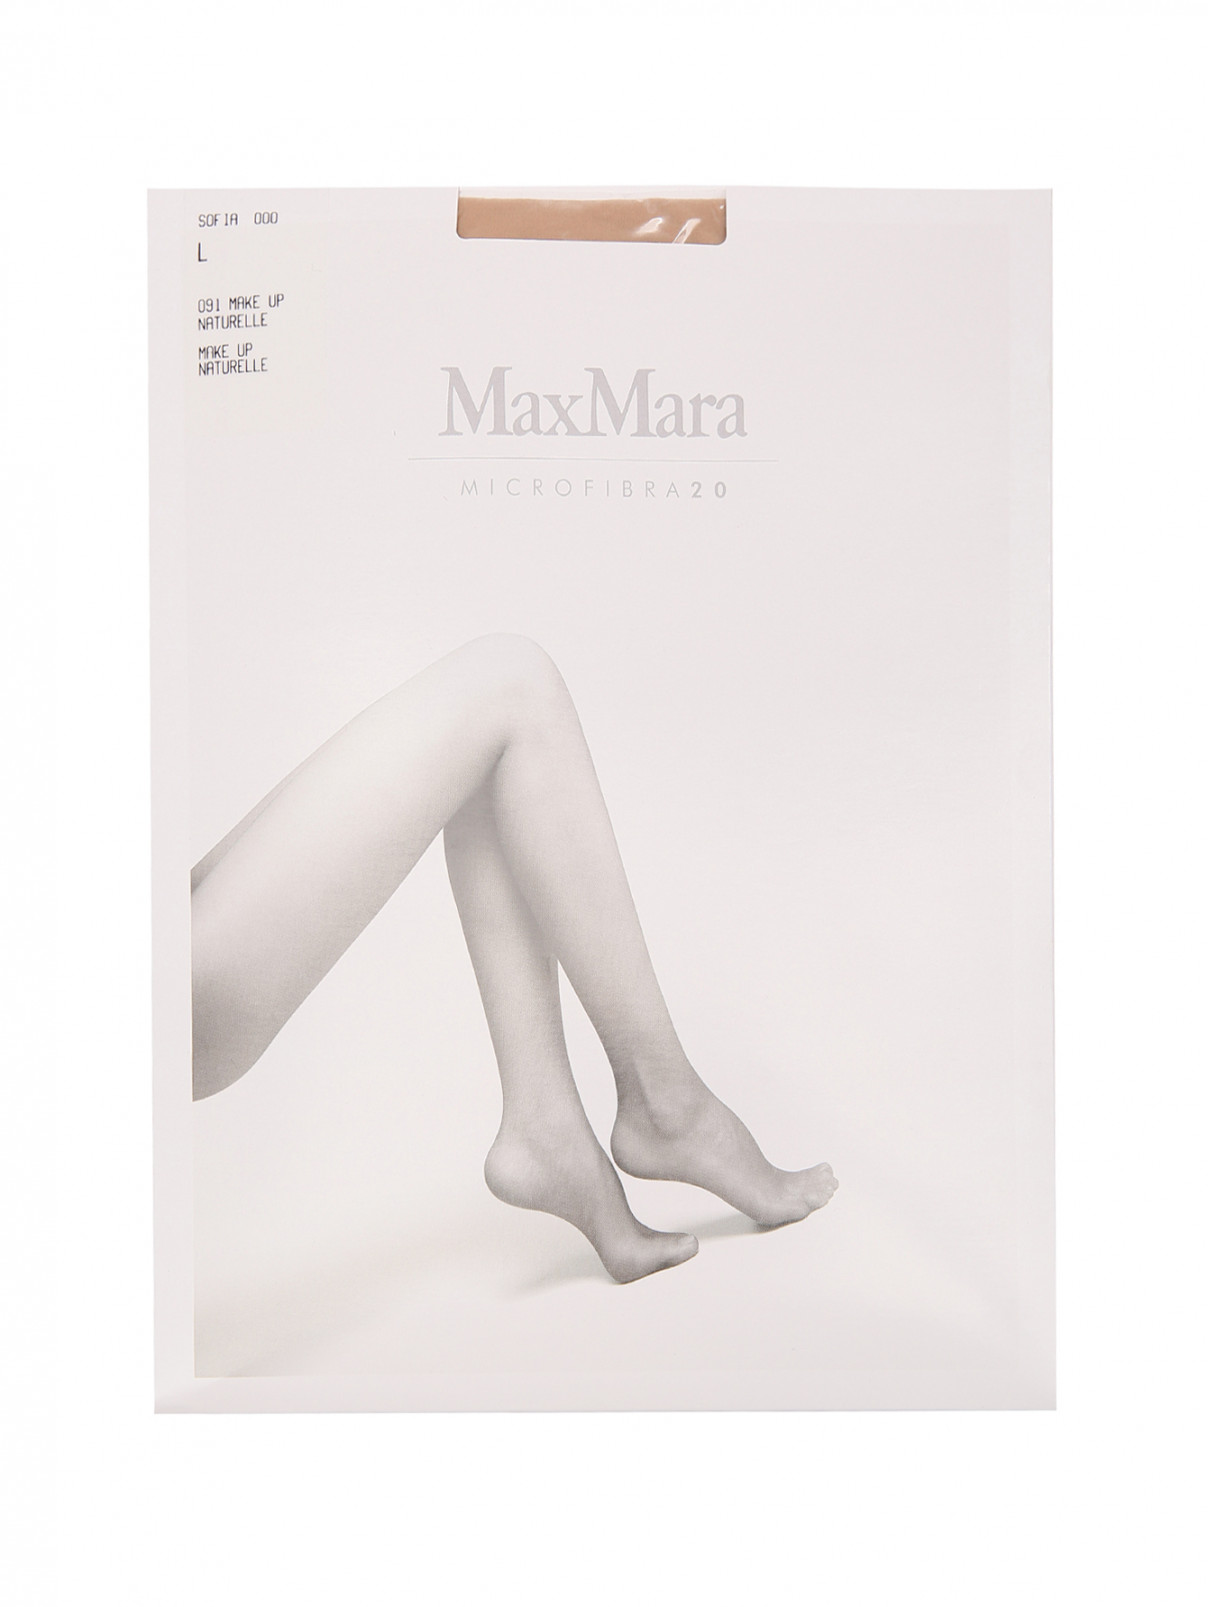 Колготки Microfibra 20 Max Mara  –  Общий вид  – Цвет:  Бежевый